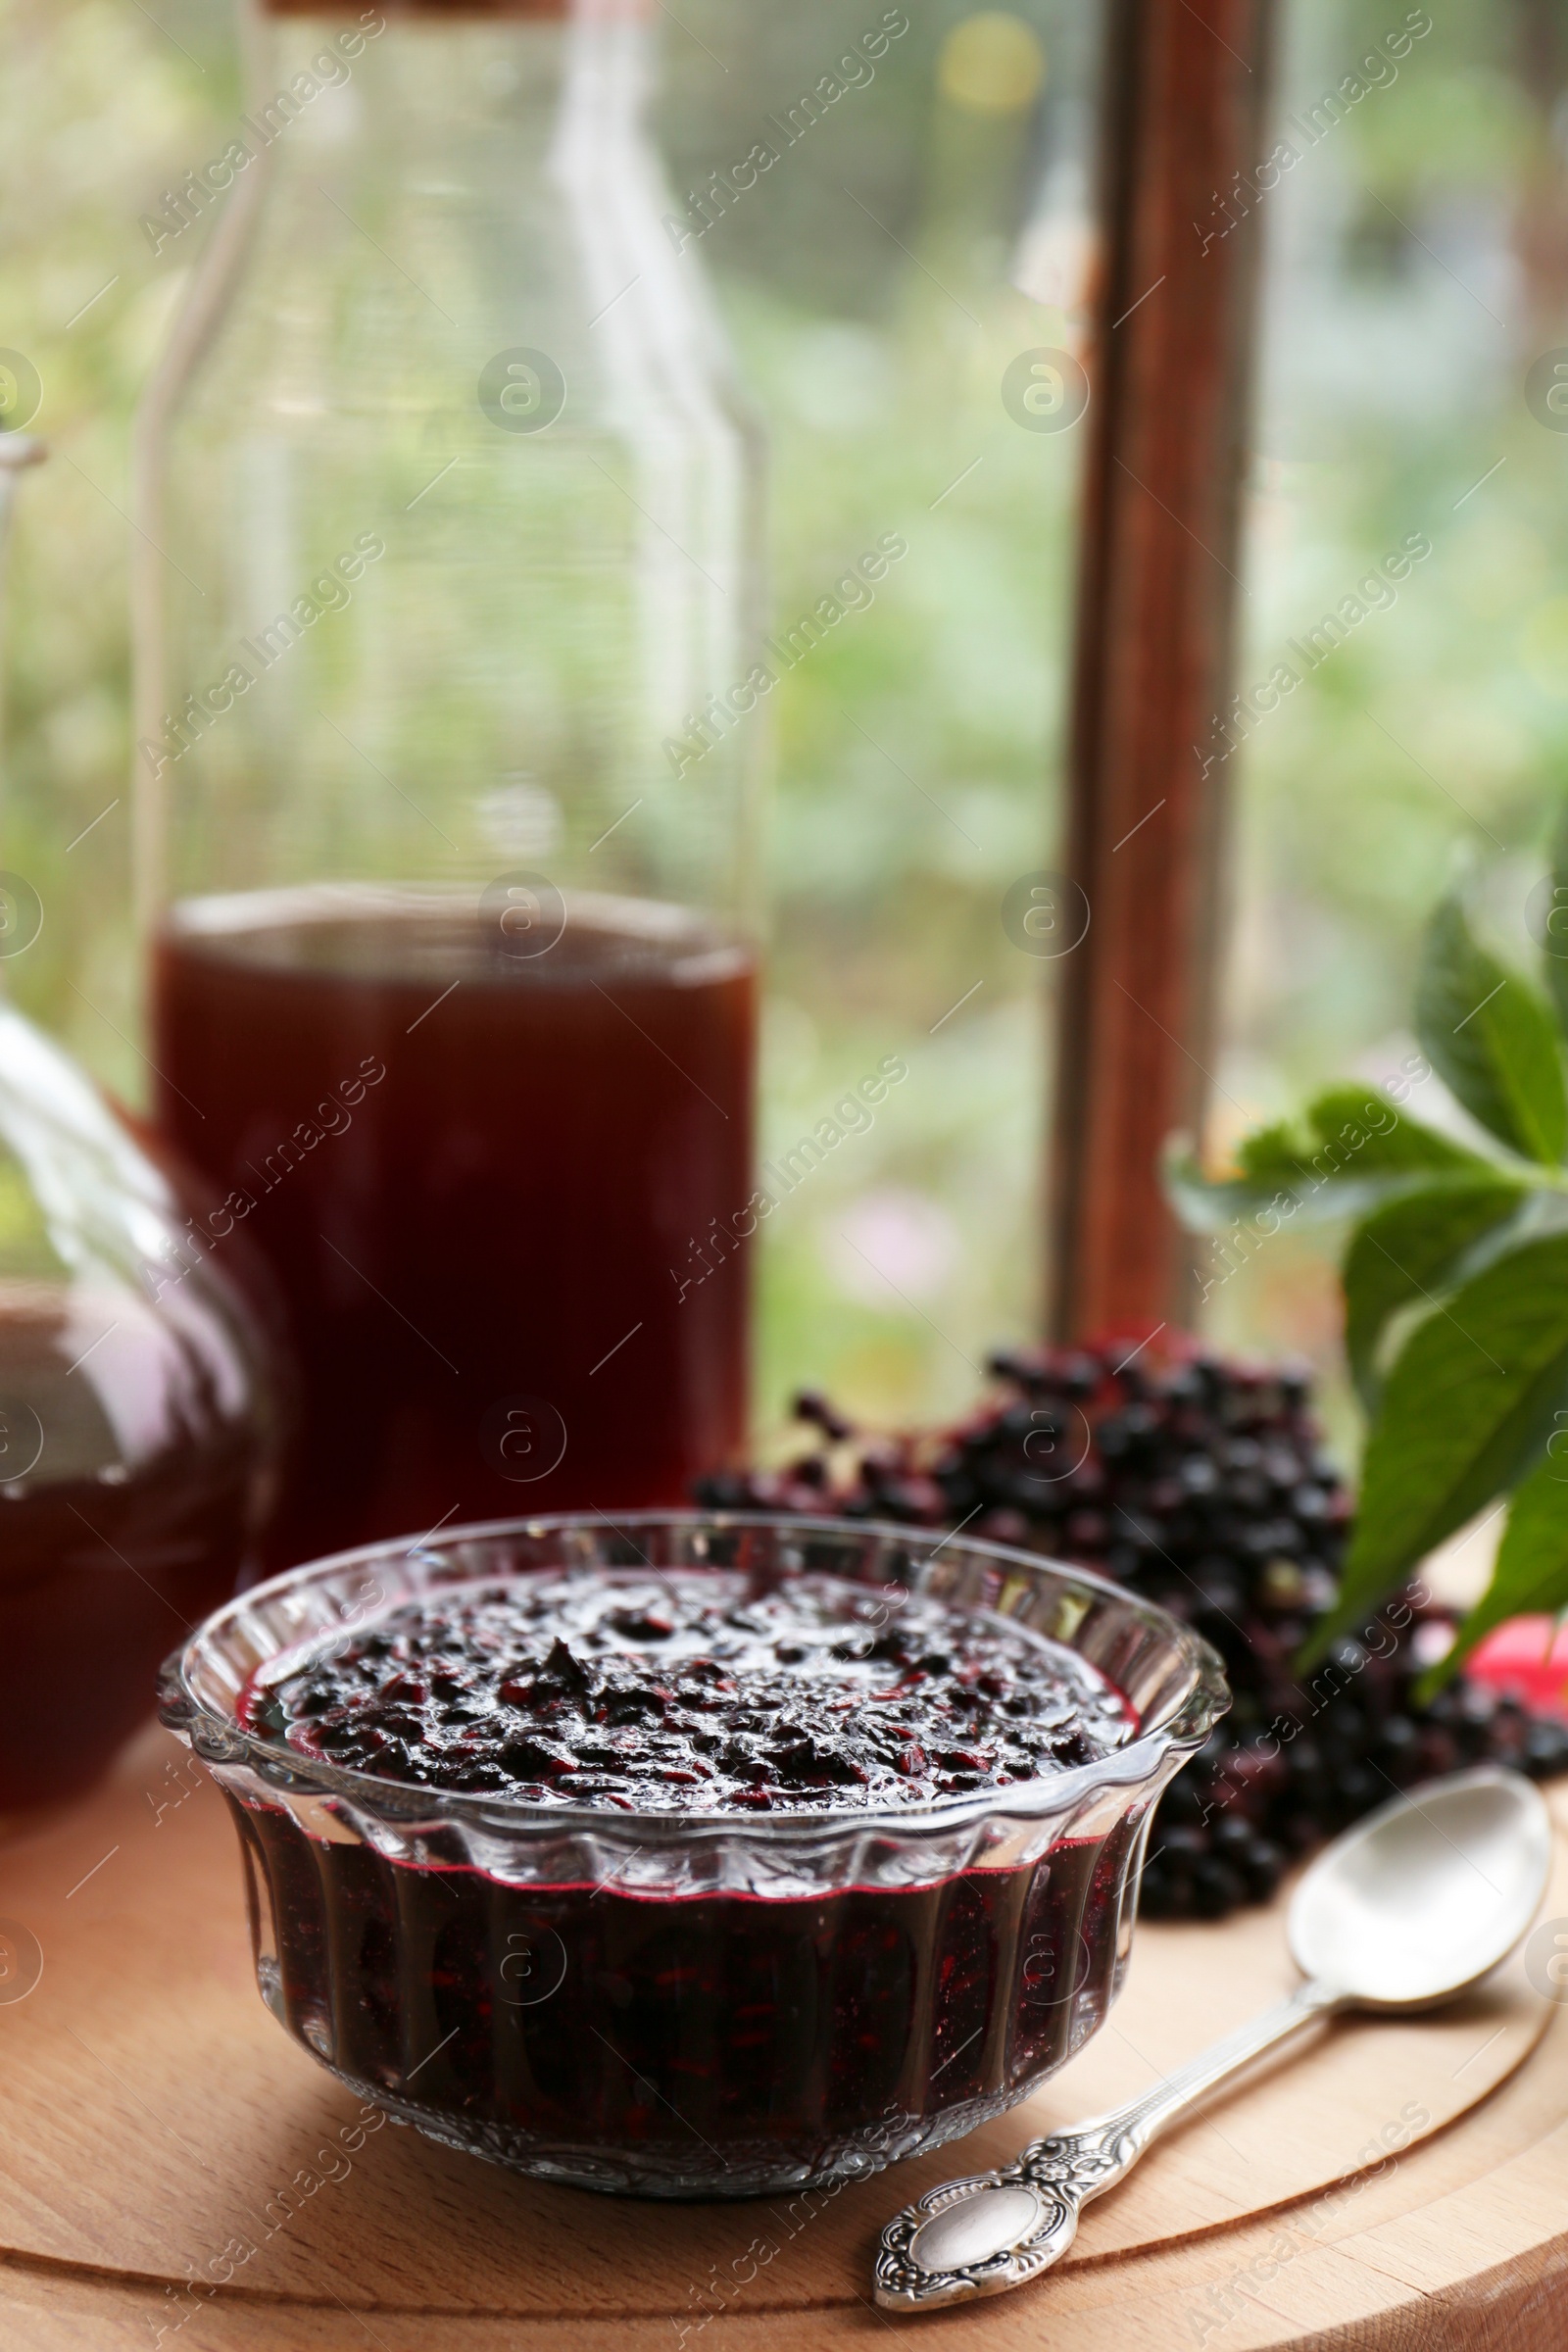 Photo of Elderberry jam and drink with Sambucus berries on table near window